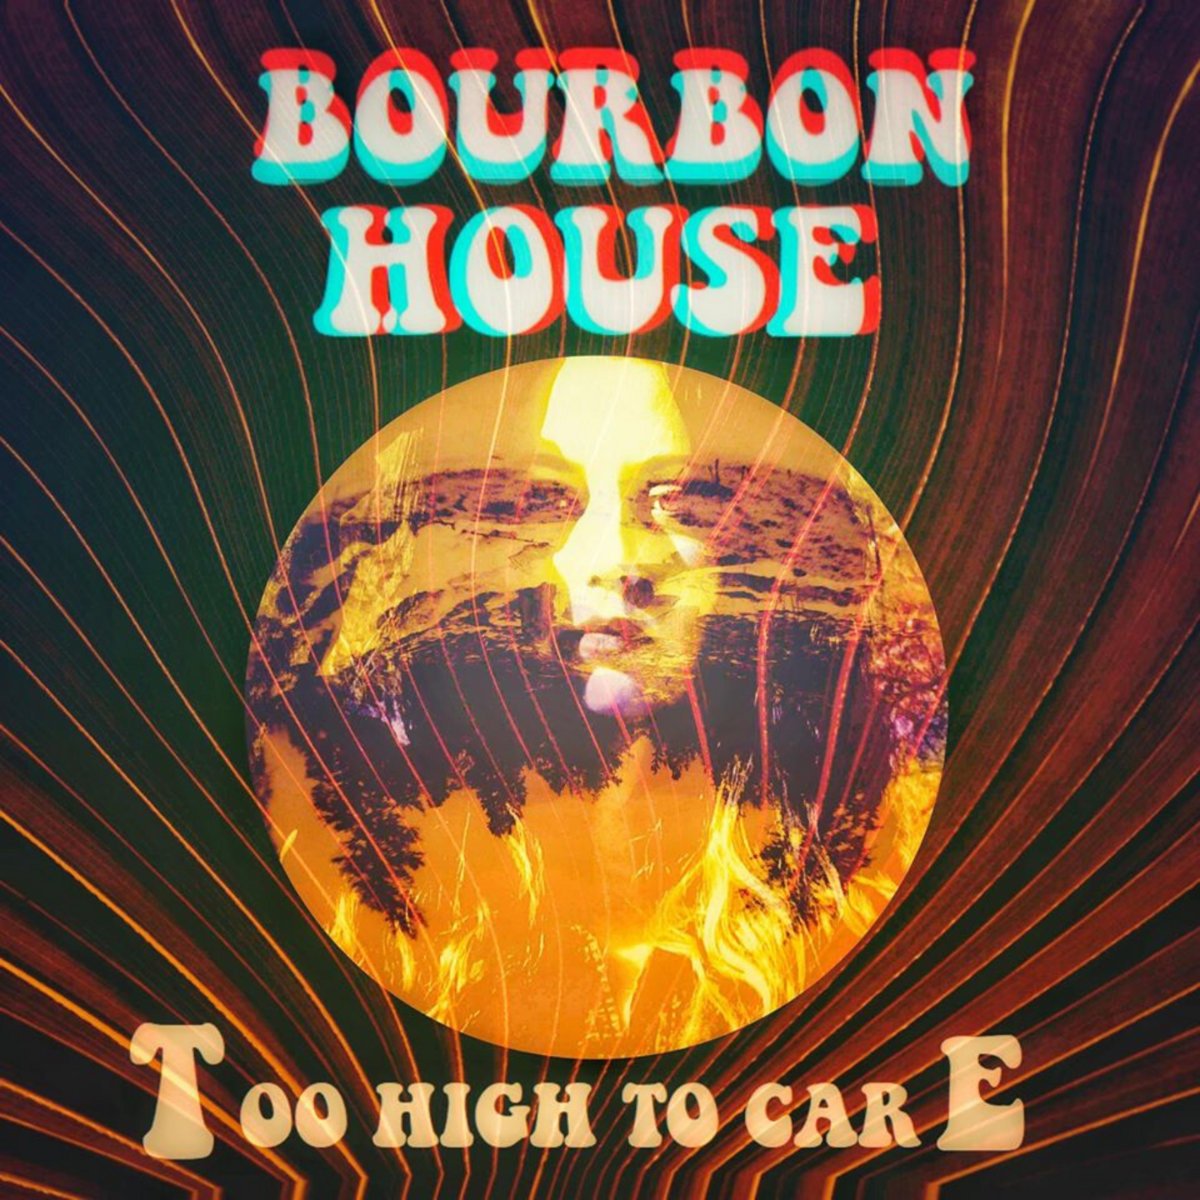 2020 New Rock Band Singles Rewind:

Bourbon House @BourbonHouse_  release Too High To Care
#BourbonHouse #toohightocare 
April, 17, 2020

🎧 youtu.be/ojaCFXceYlY